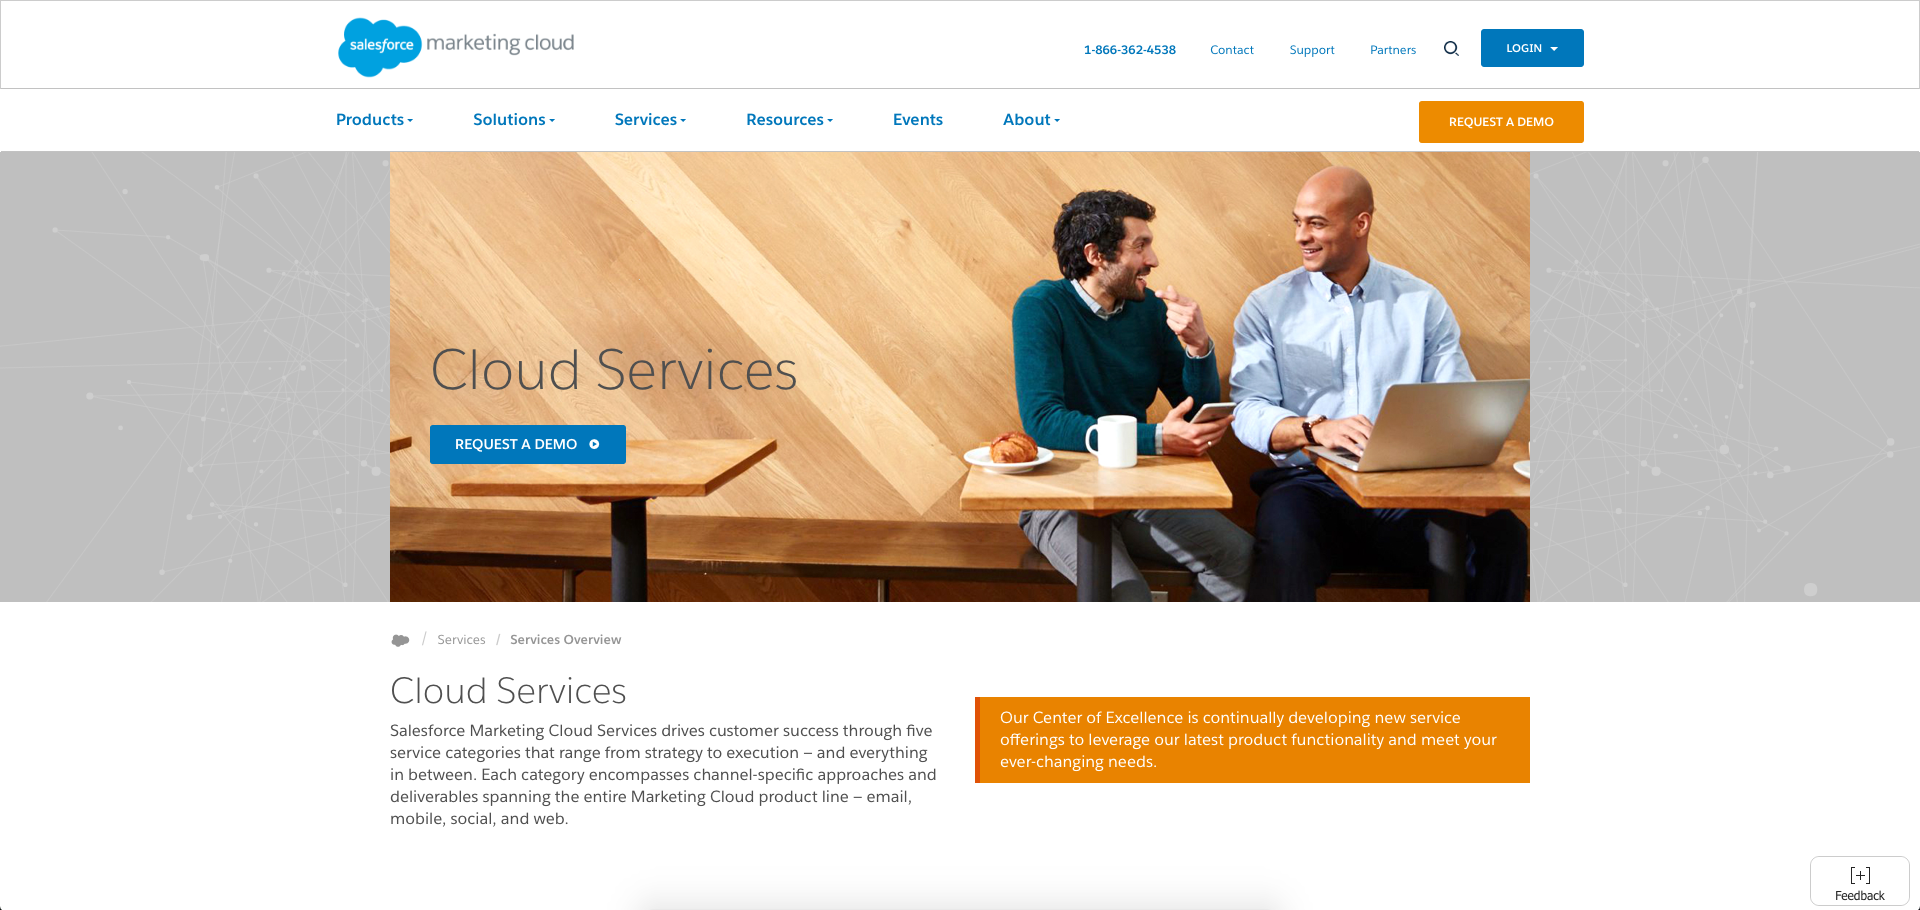 Salesforce Marketing Cloud Services Page